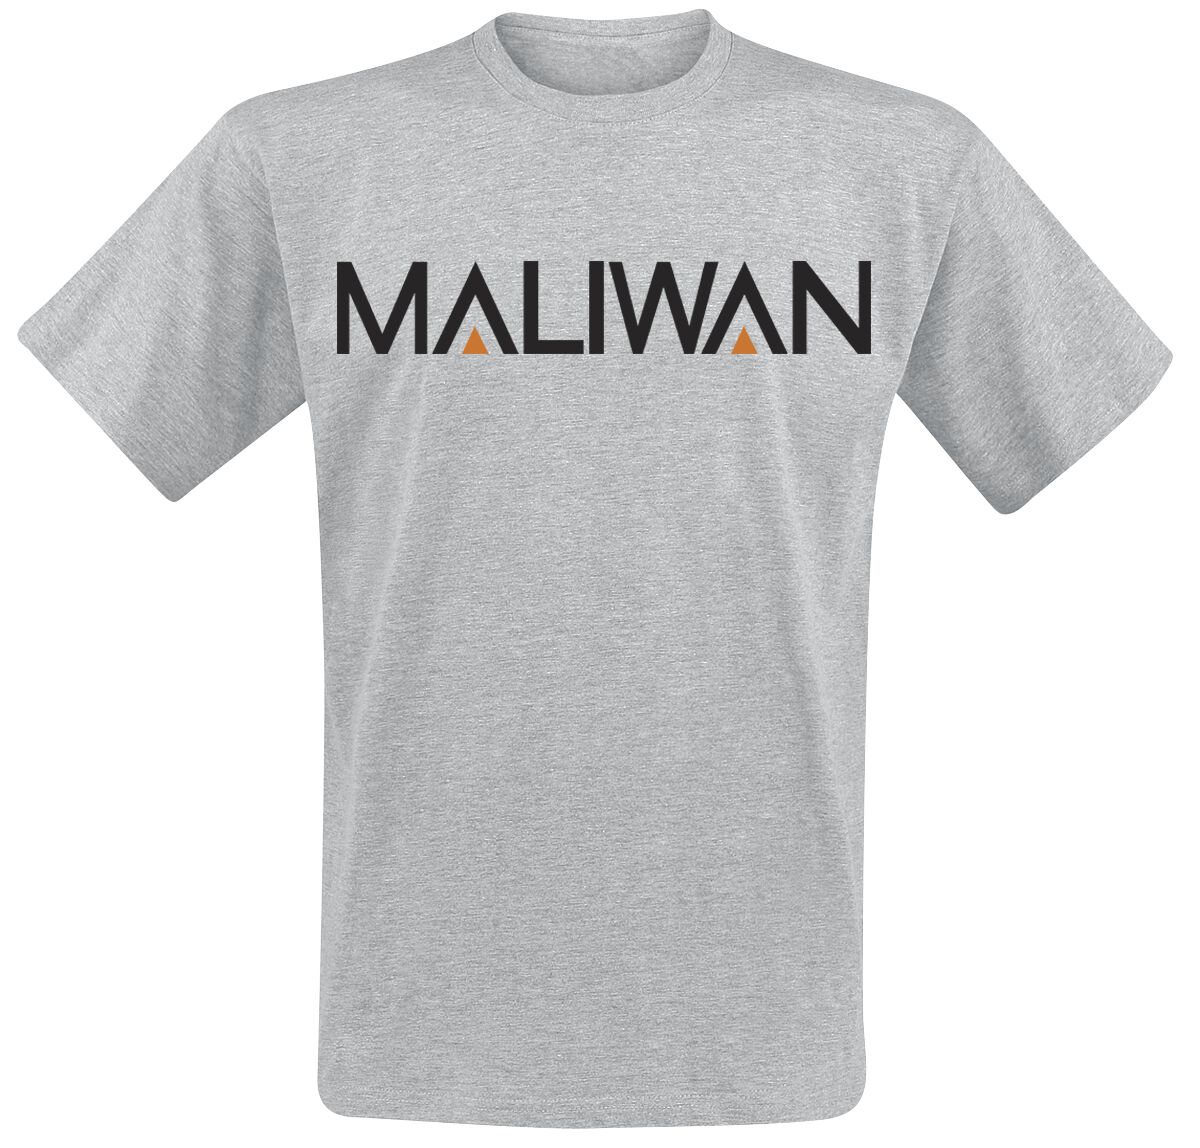 Borderlands 3 - Maliwan T-Shirt grau meliert in XXL